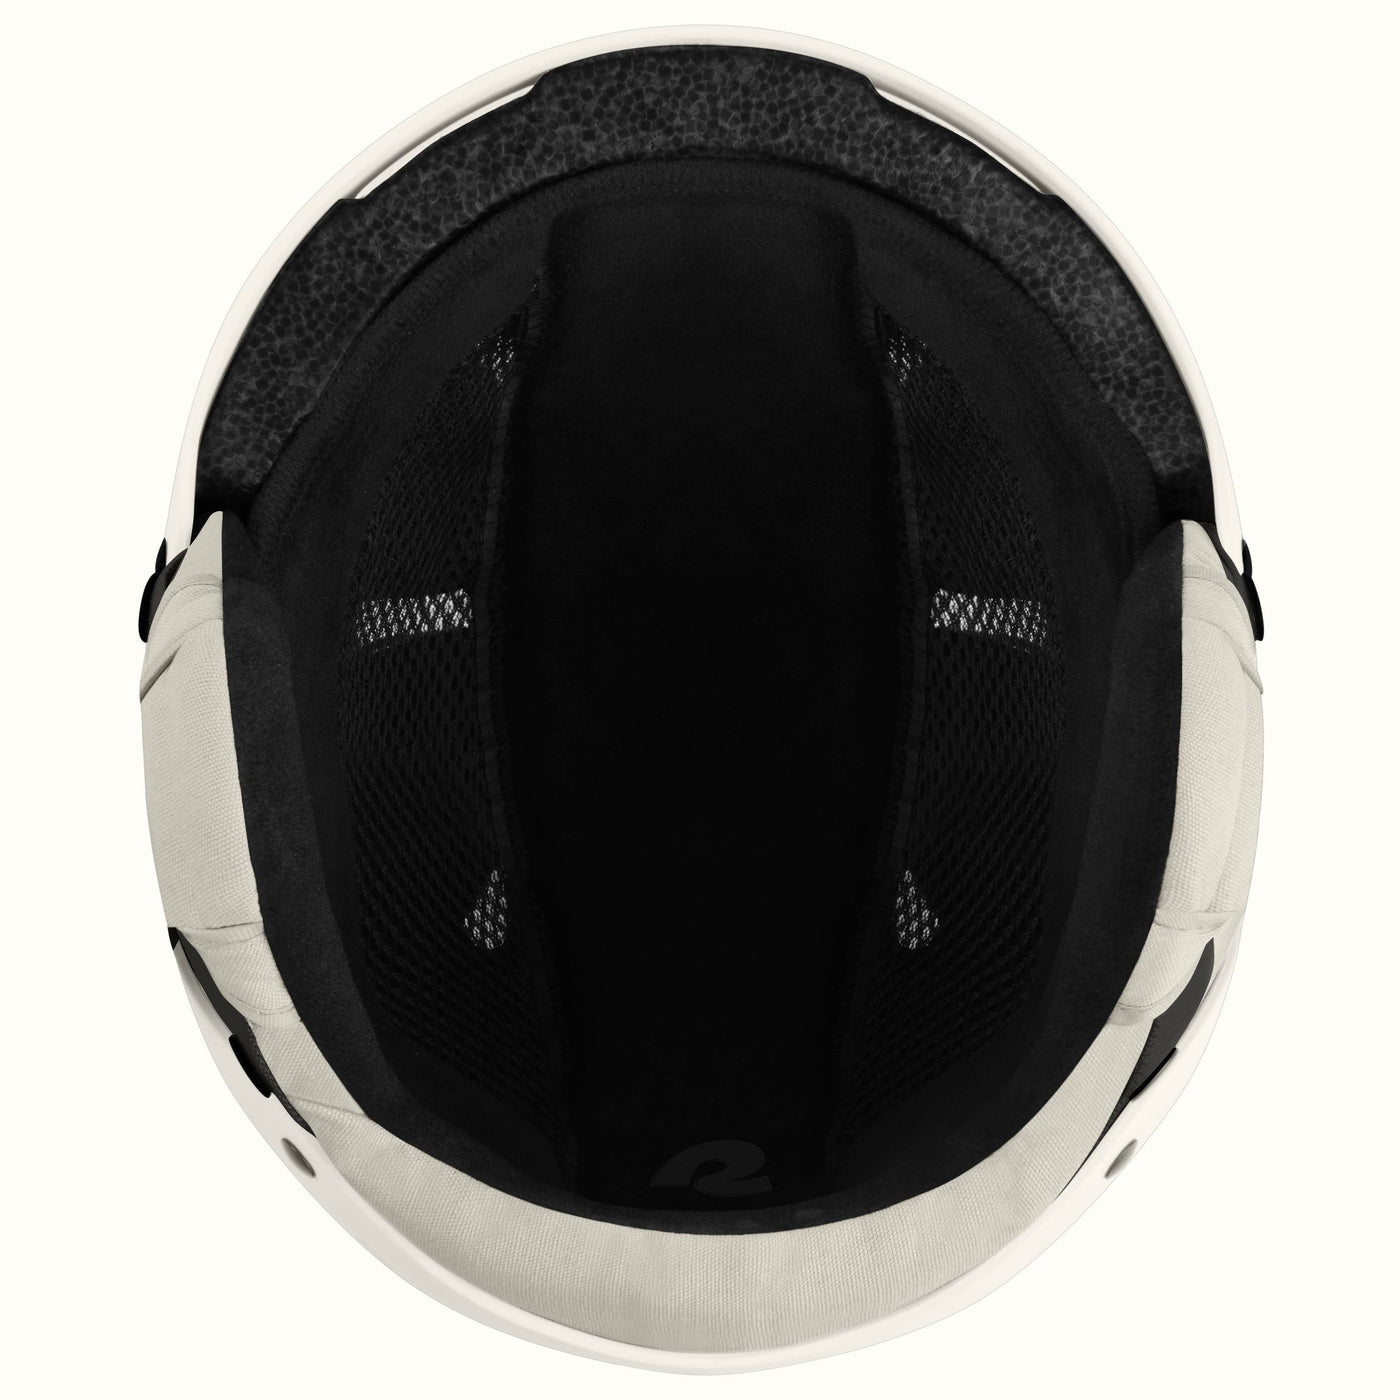 Zephyr Ski & Snowboard Helmet